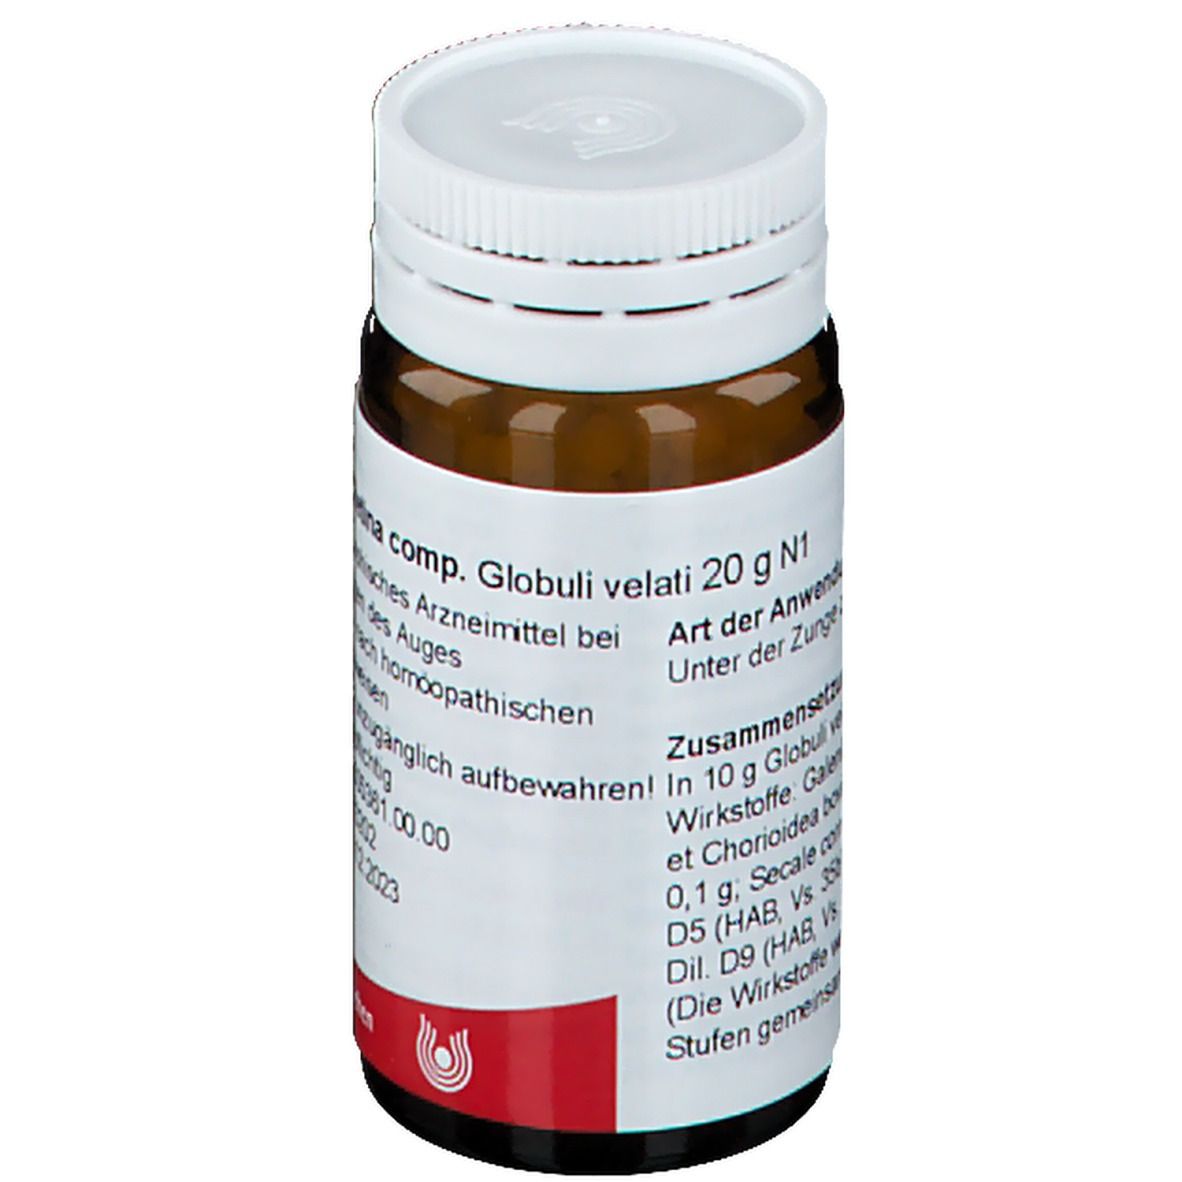 WALA® GALENIT/ Retina comp. Globuli